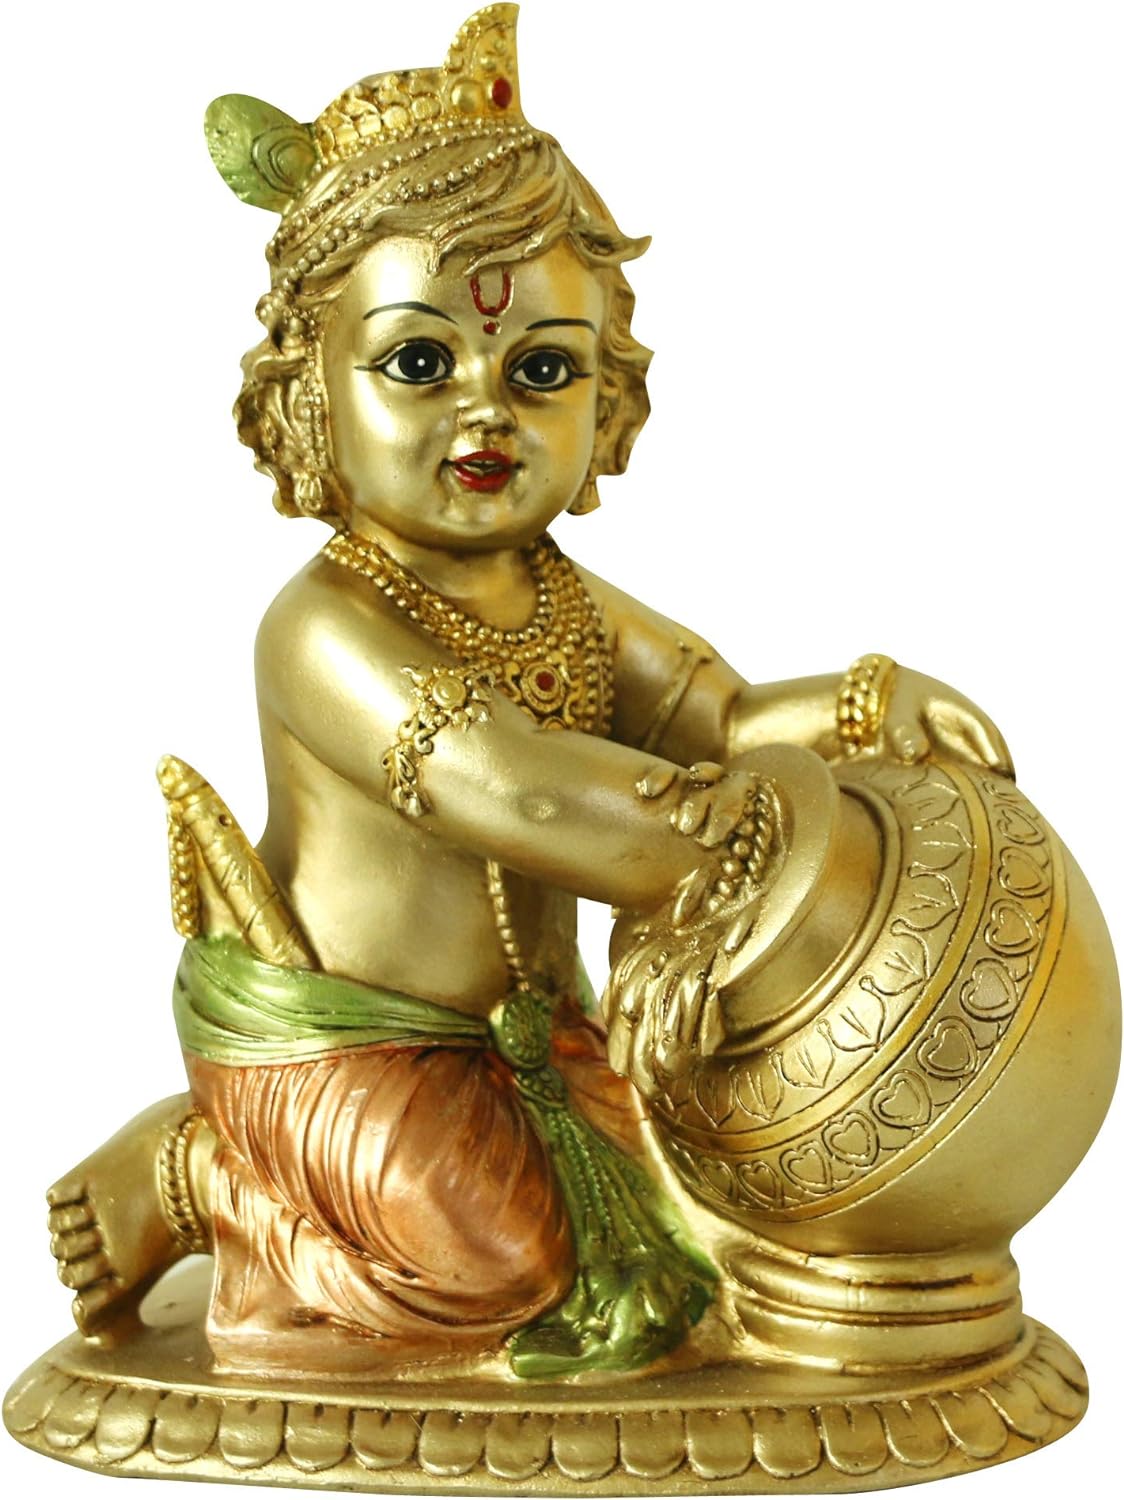 Hindu Lord Baby Krishna Statue - Indian Idol Krishna Figurines for Home Mandir Temple Pooja - India Murti Buddha Sculpture Religious Items